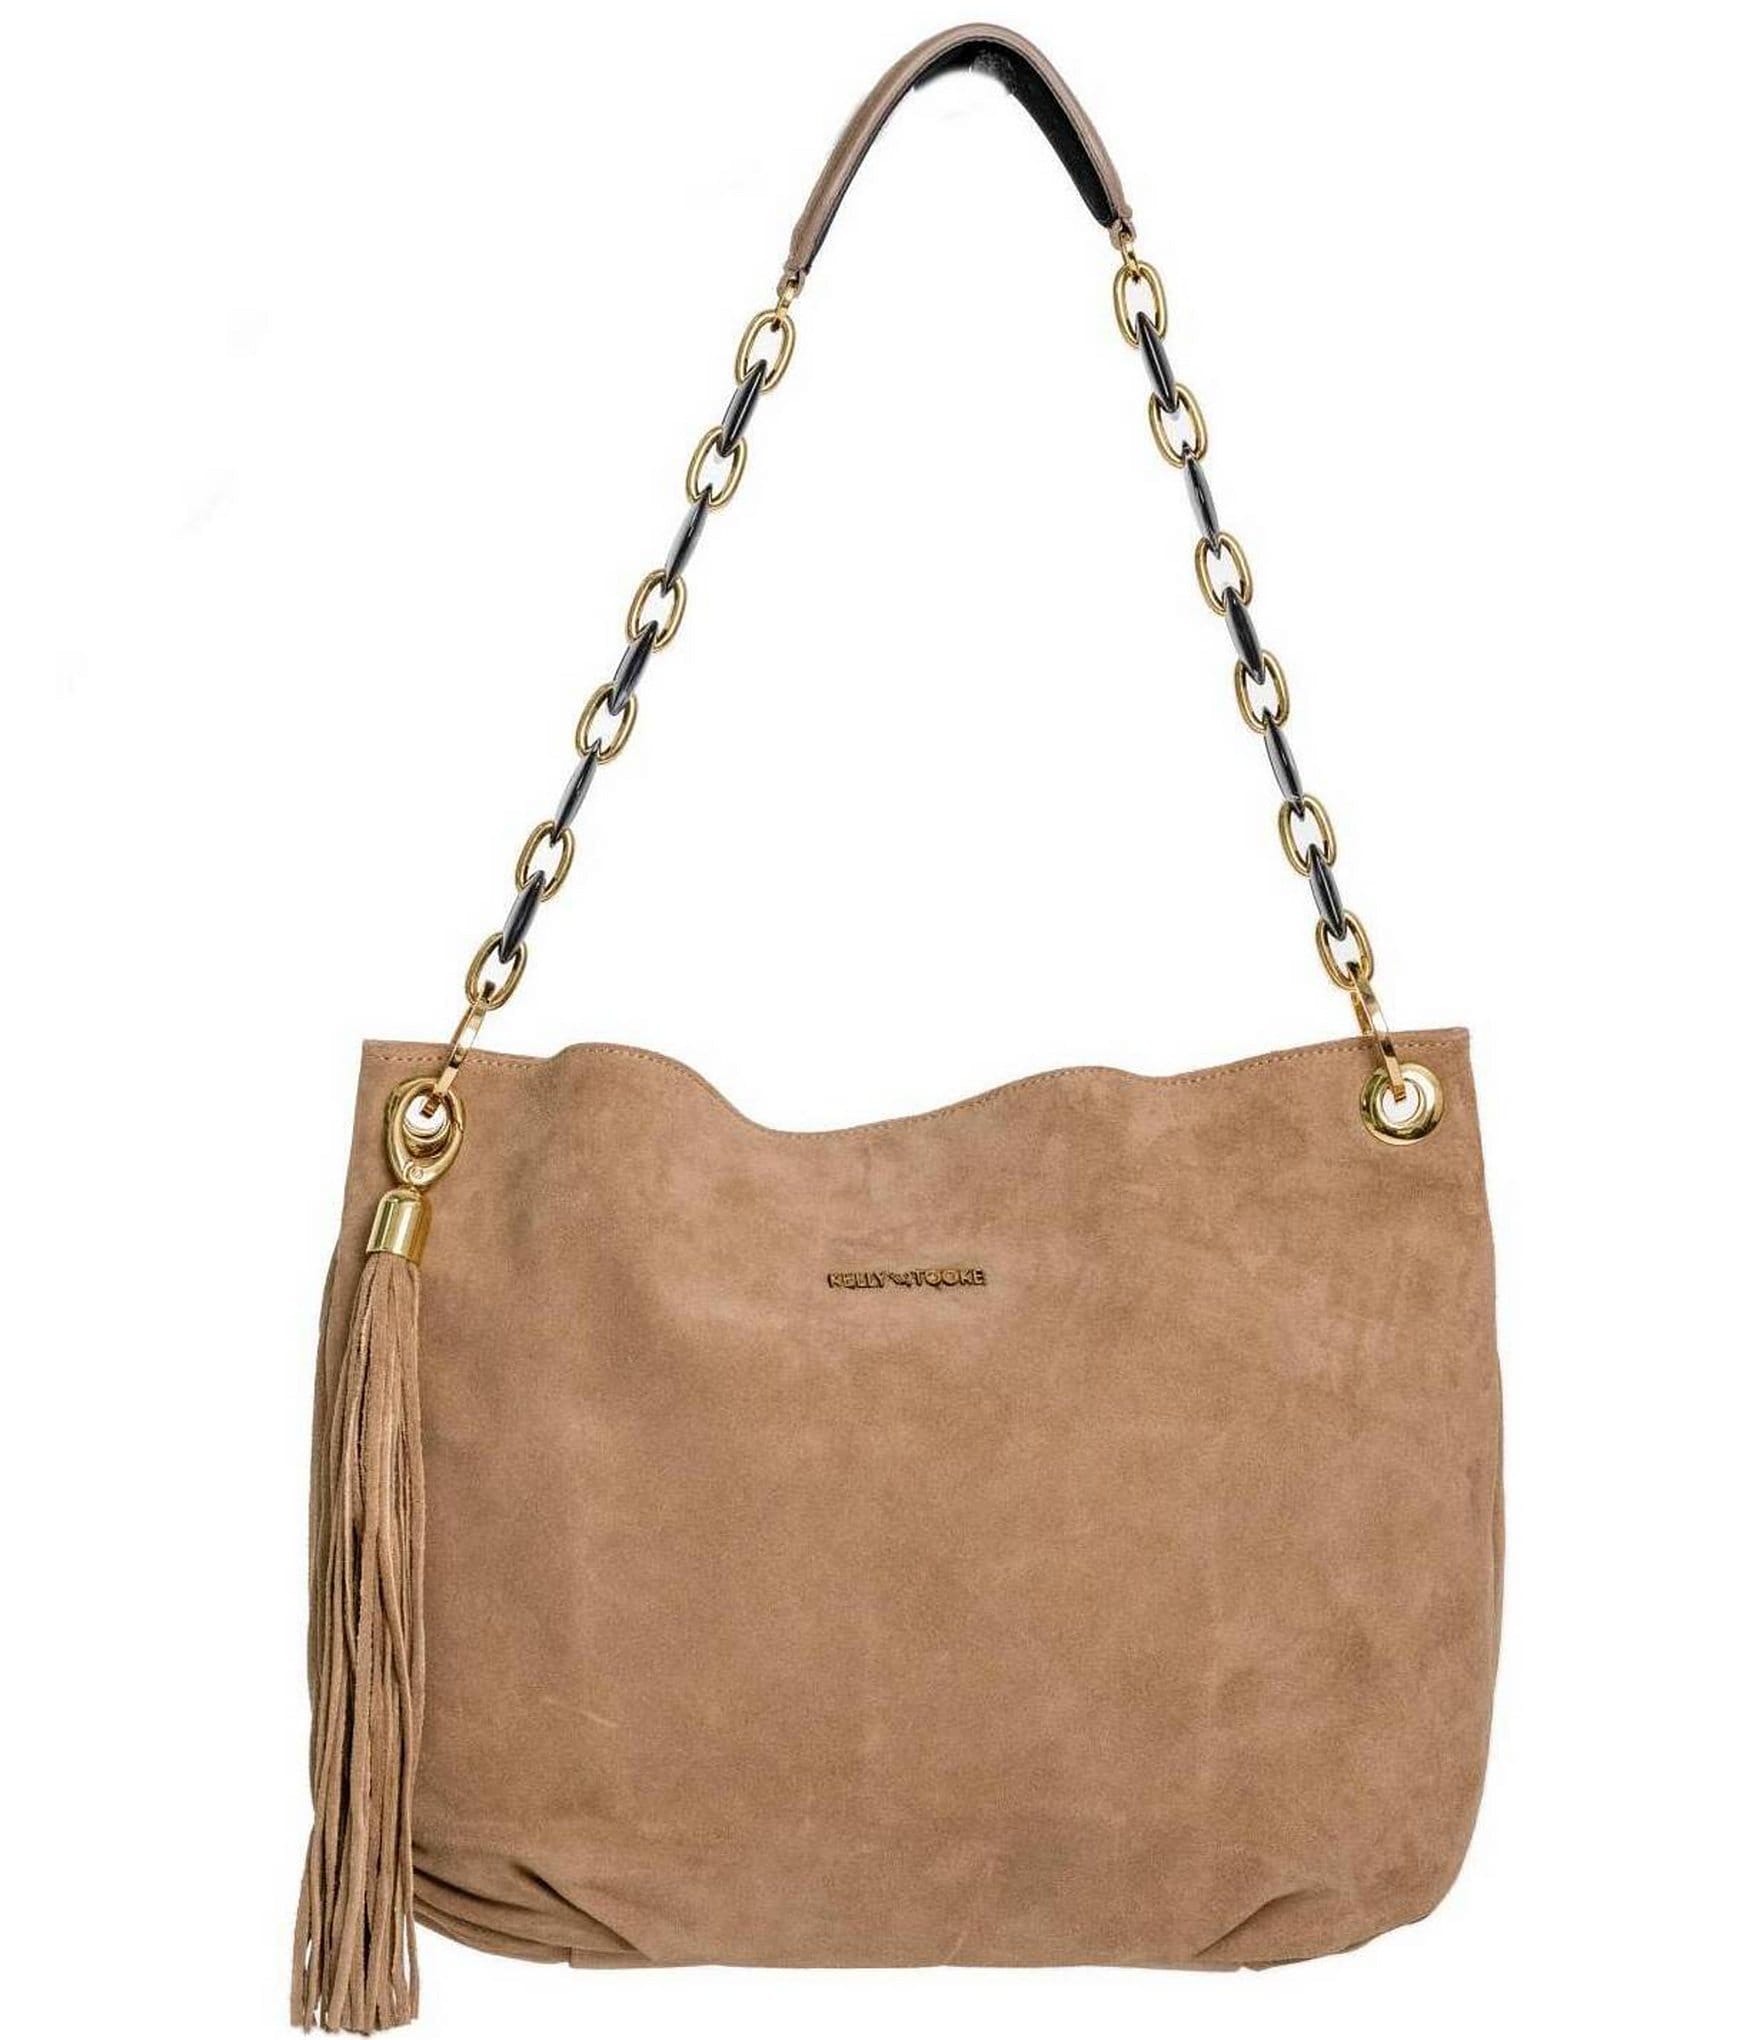 Kelly-Tooke Medium Soho Black & Gold Chain Leather Tassel Satchel Bag